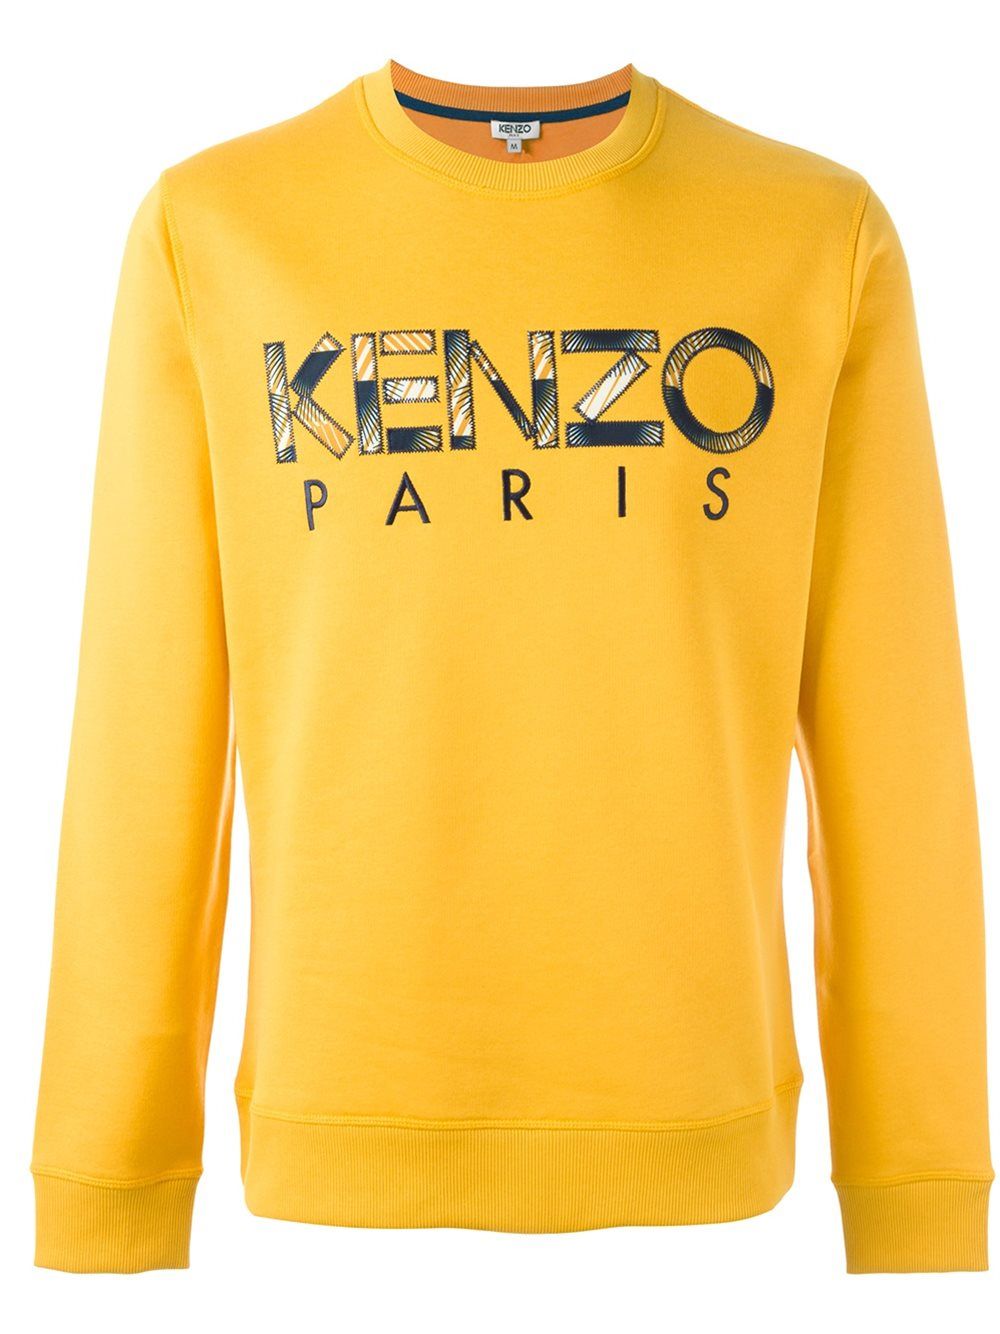 Lyst - Kenzo Paris Sweatshirt in Black for Men